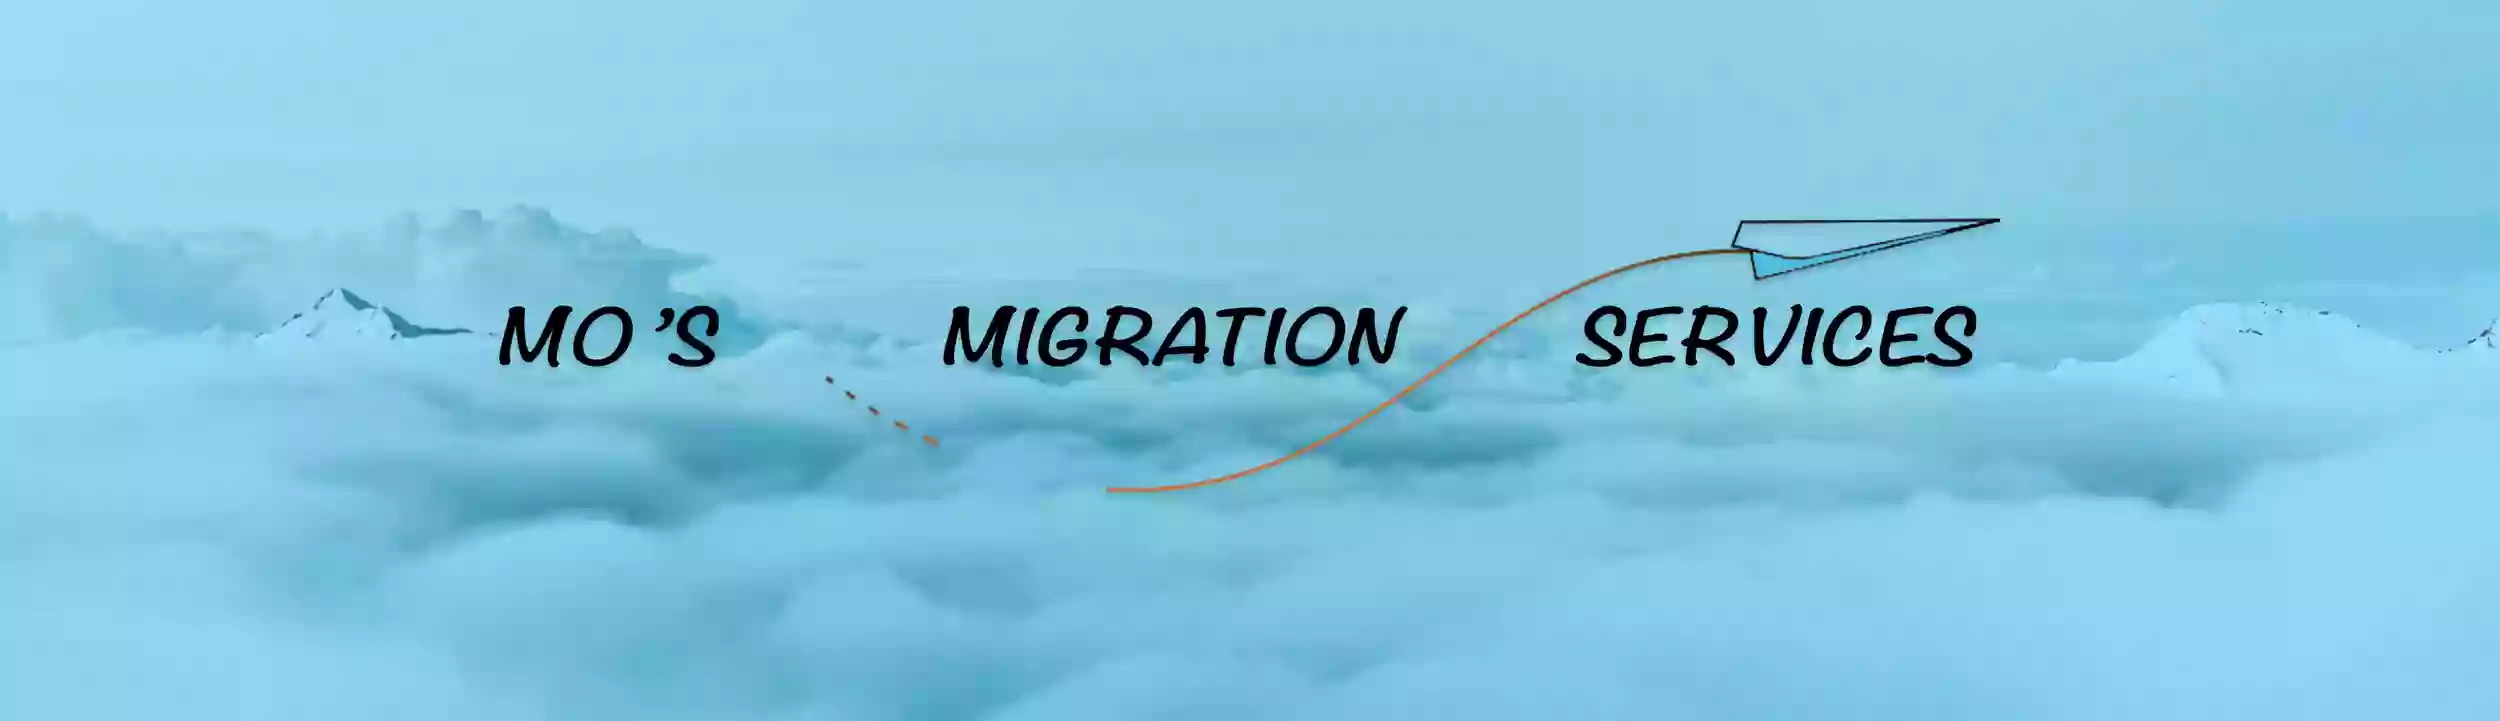 Mo's Migration Services